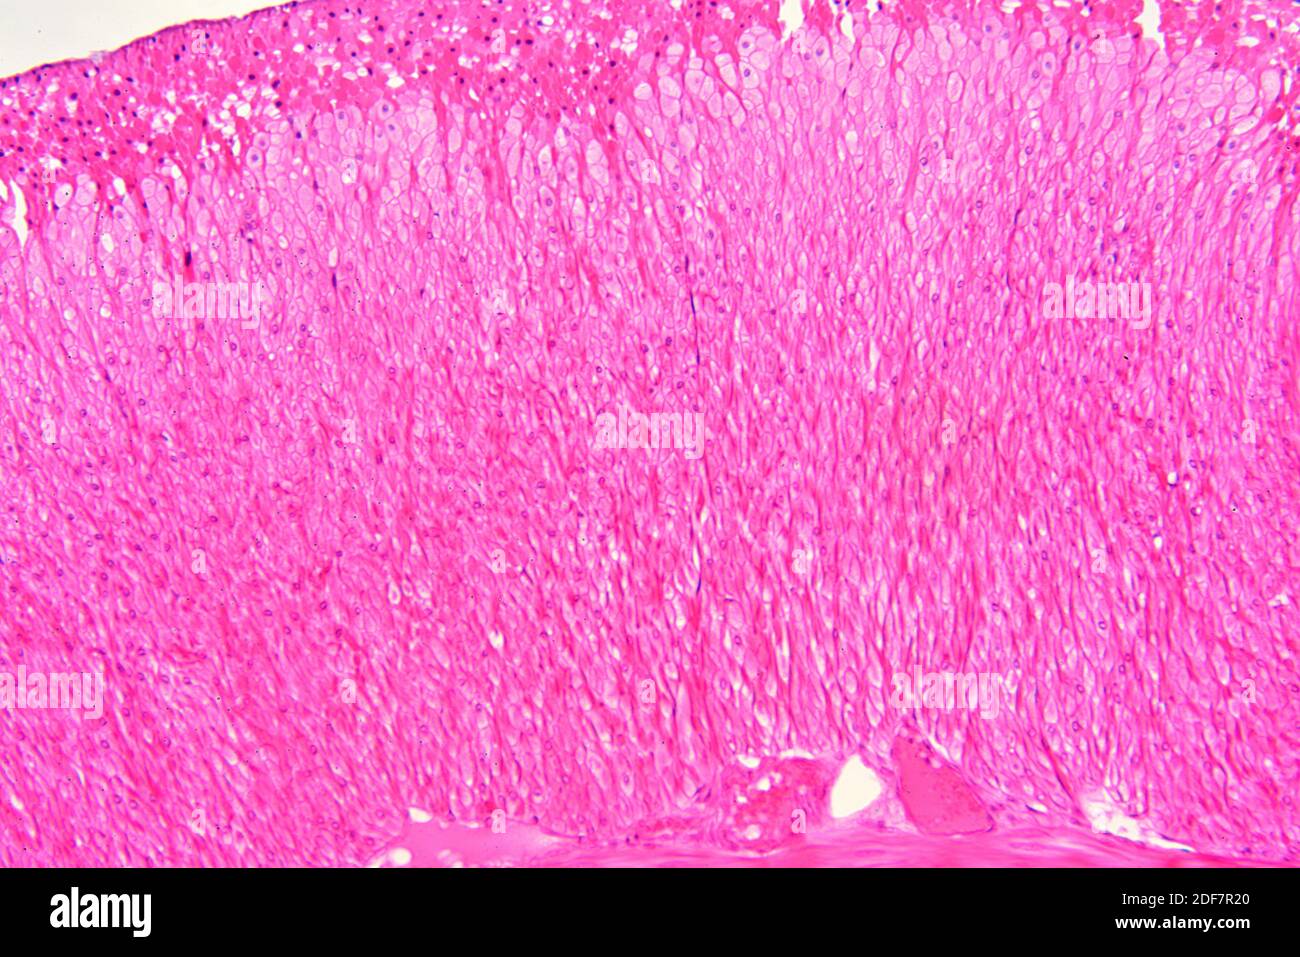 Human columnar epithelium. X75 at 10 cm wide. Stock Photo